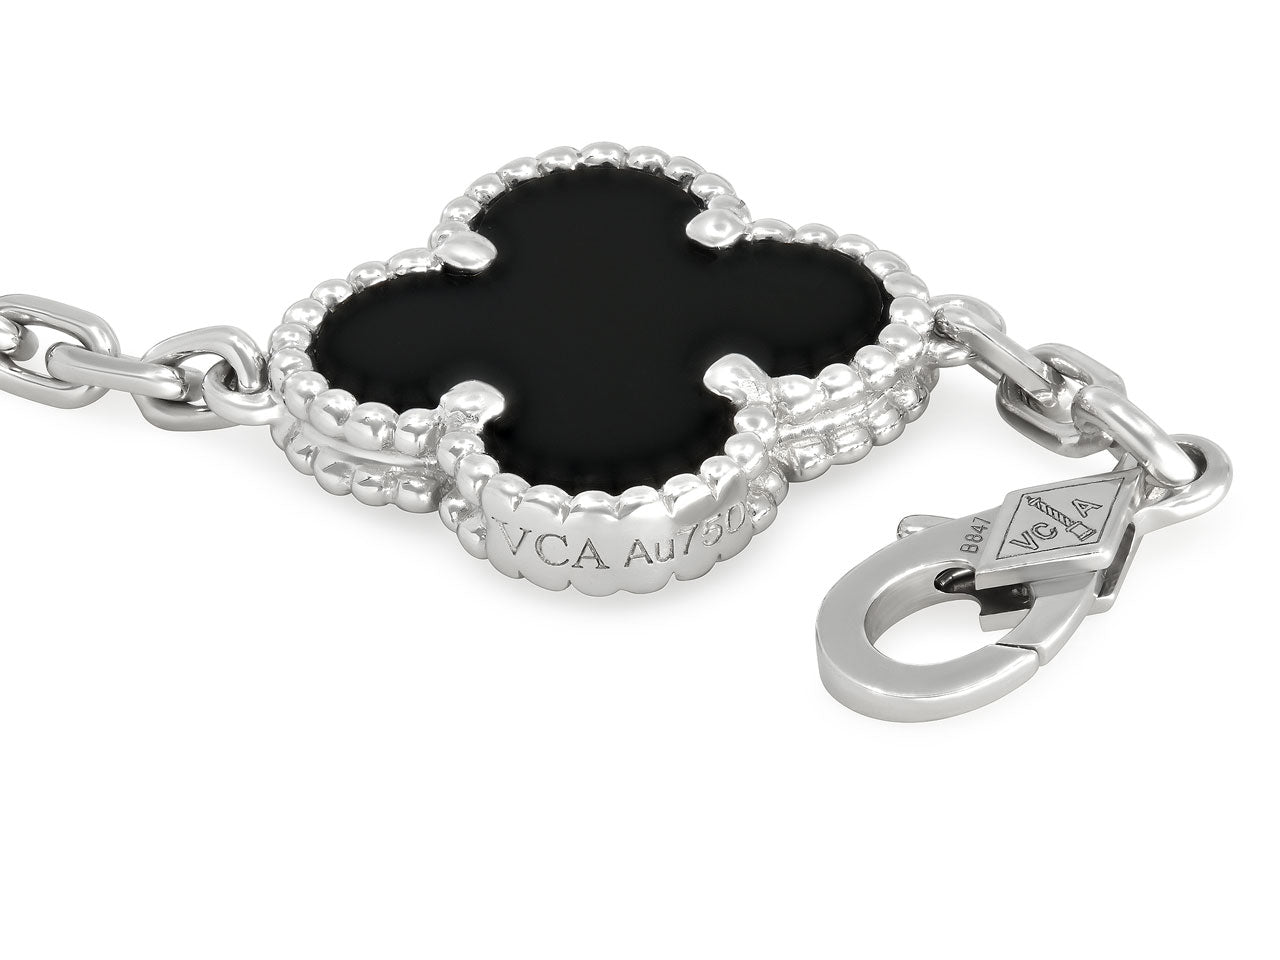 Pre-Owned Van Cleef & Arpels Perlée Collection Diamond Bracelet in